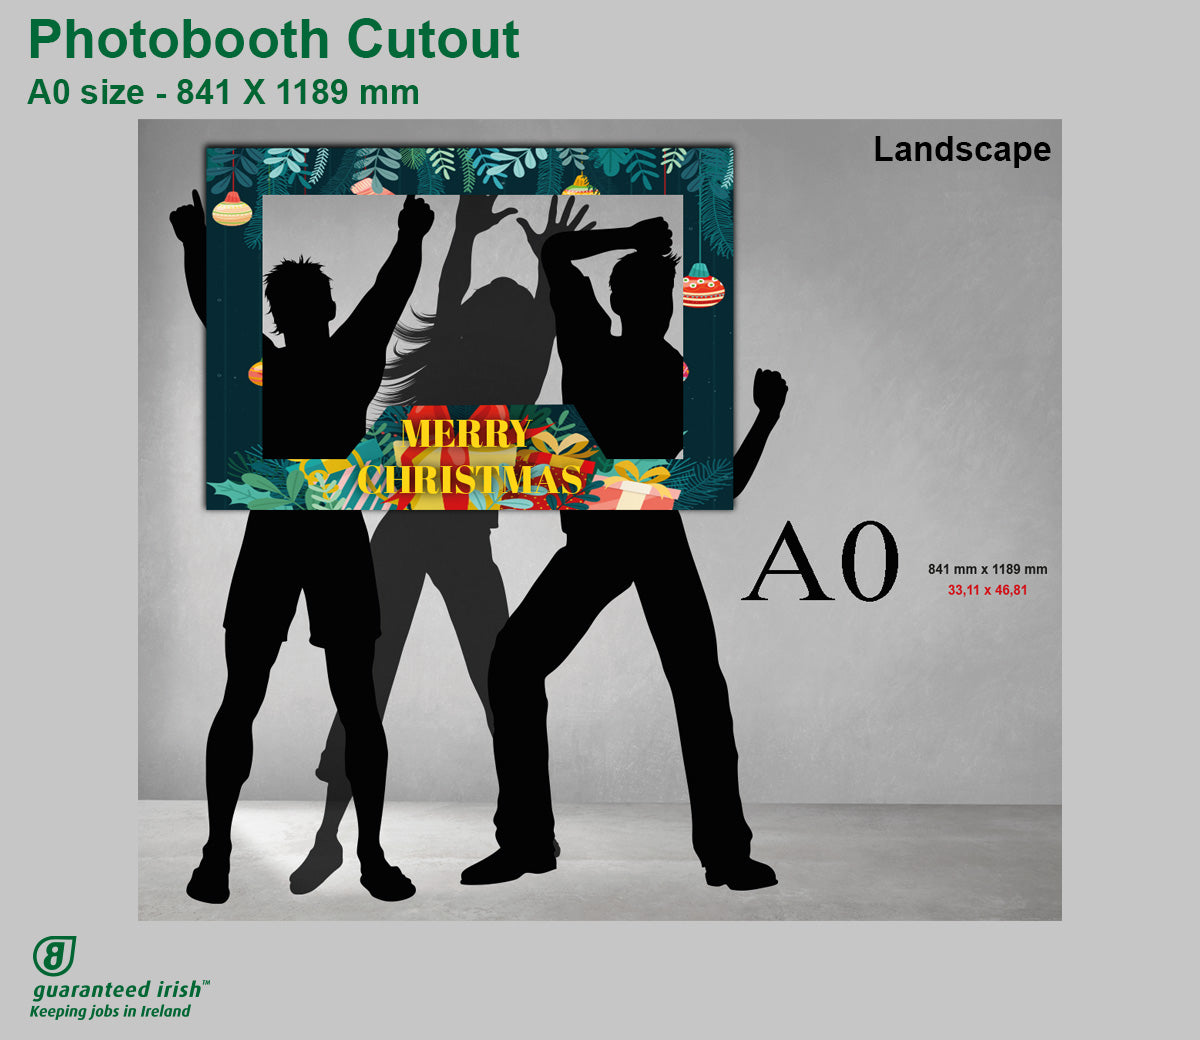 Photobooth Cutout - A0 - Landscape